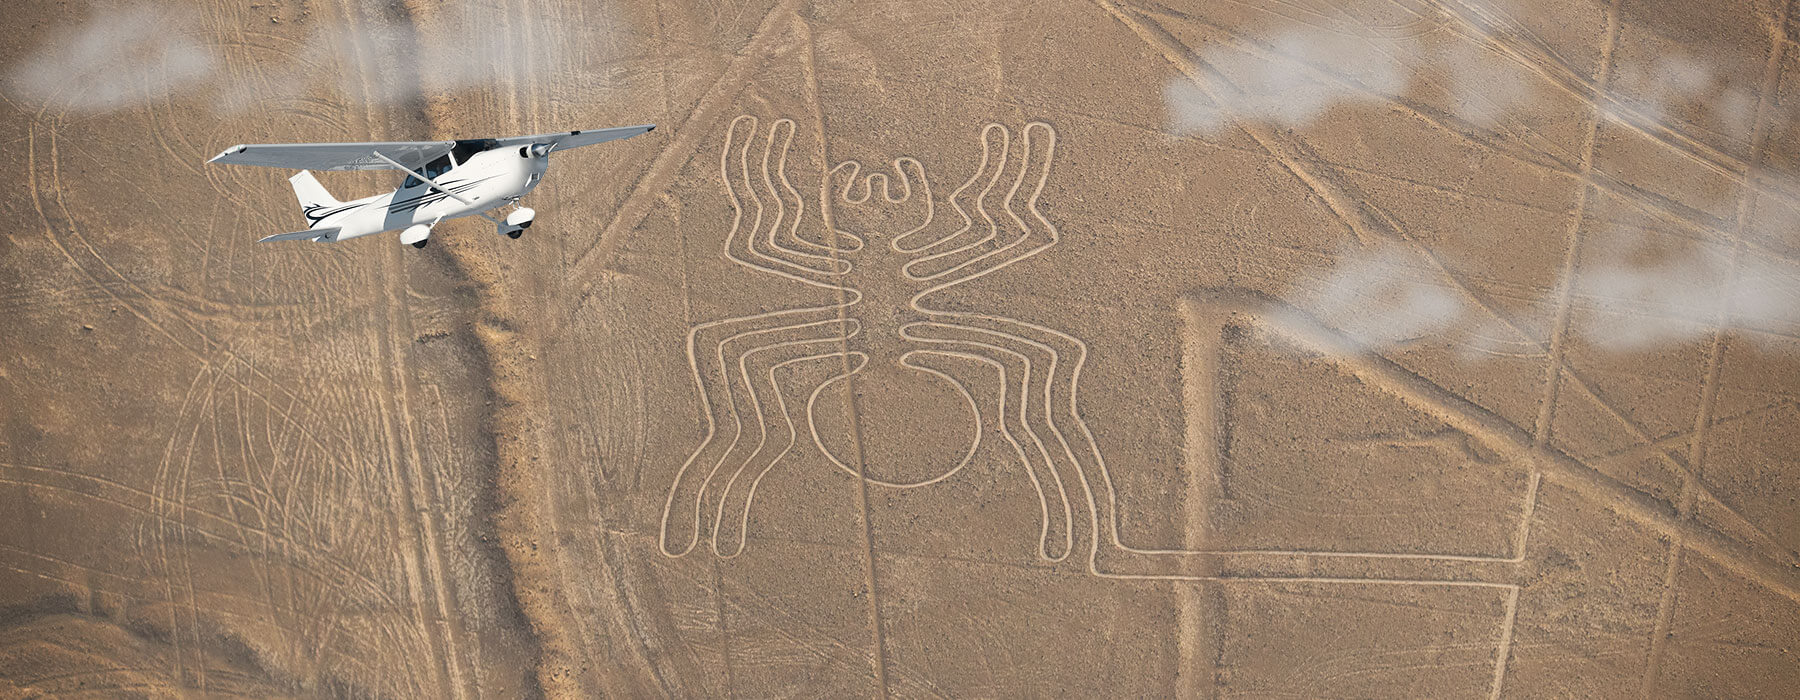 Spider - Nazca Lines Desert